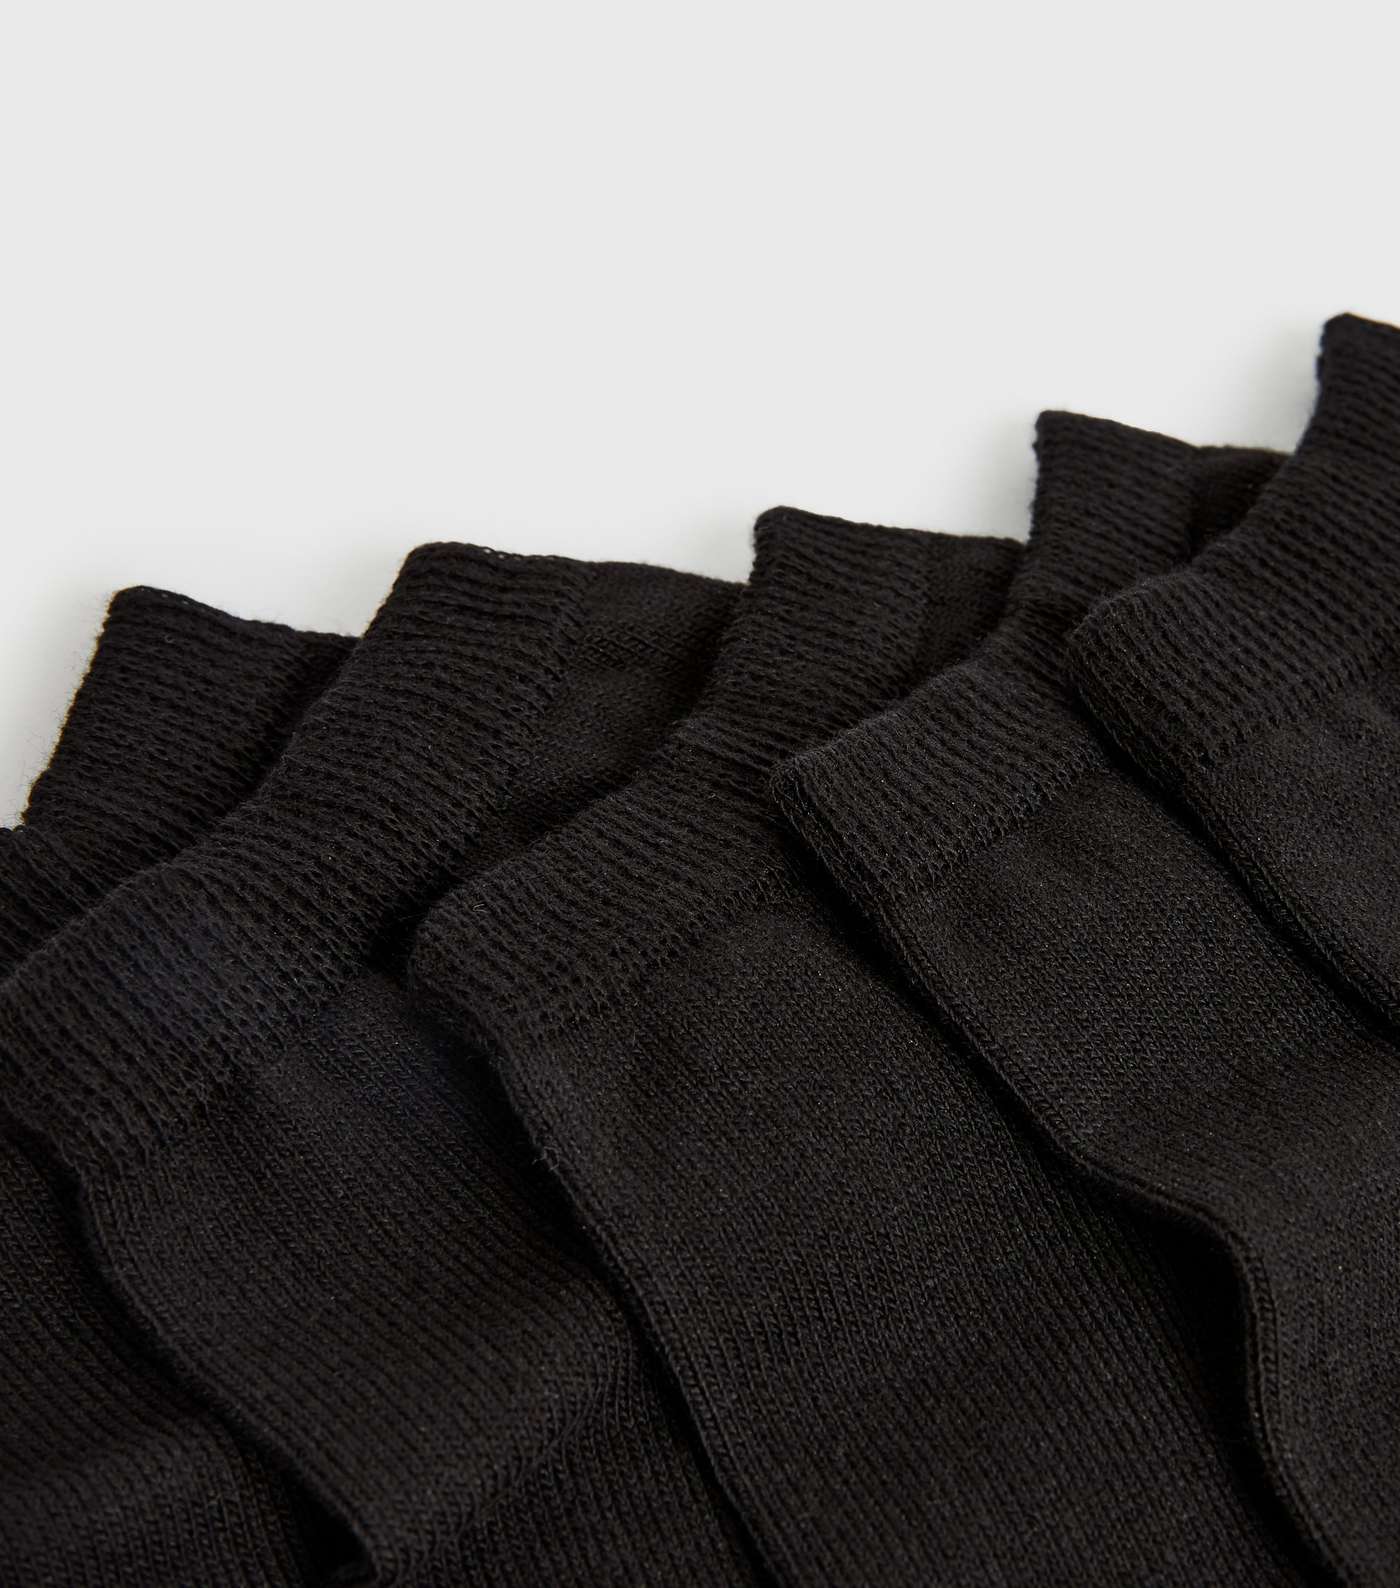 5 Pack Black Low Cut Trainer Socks Image 2